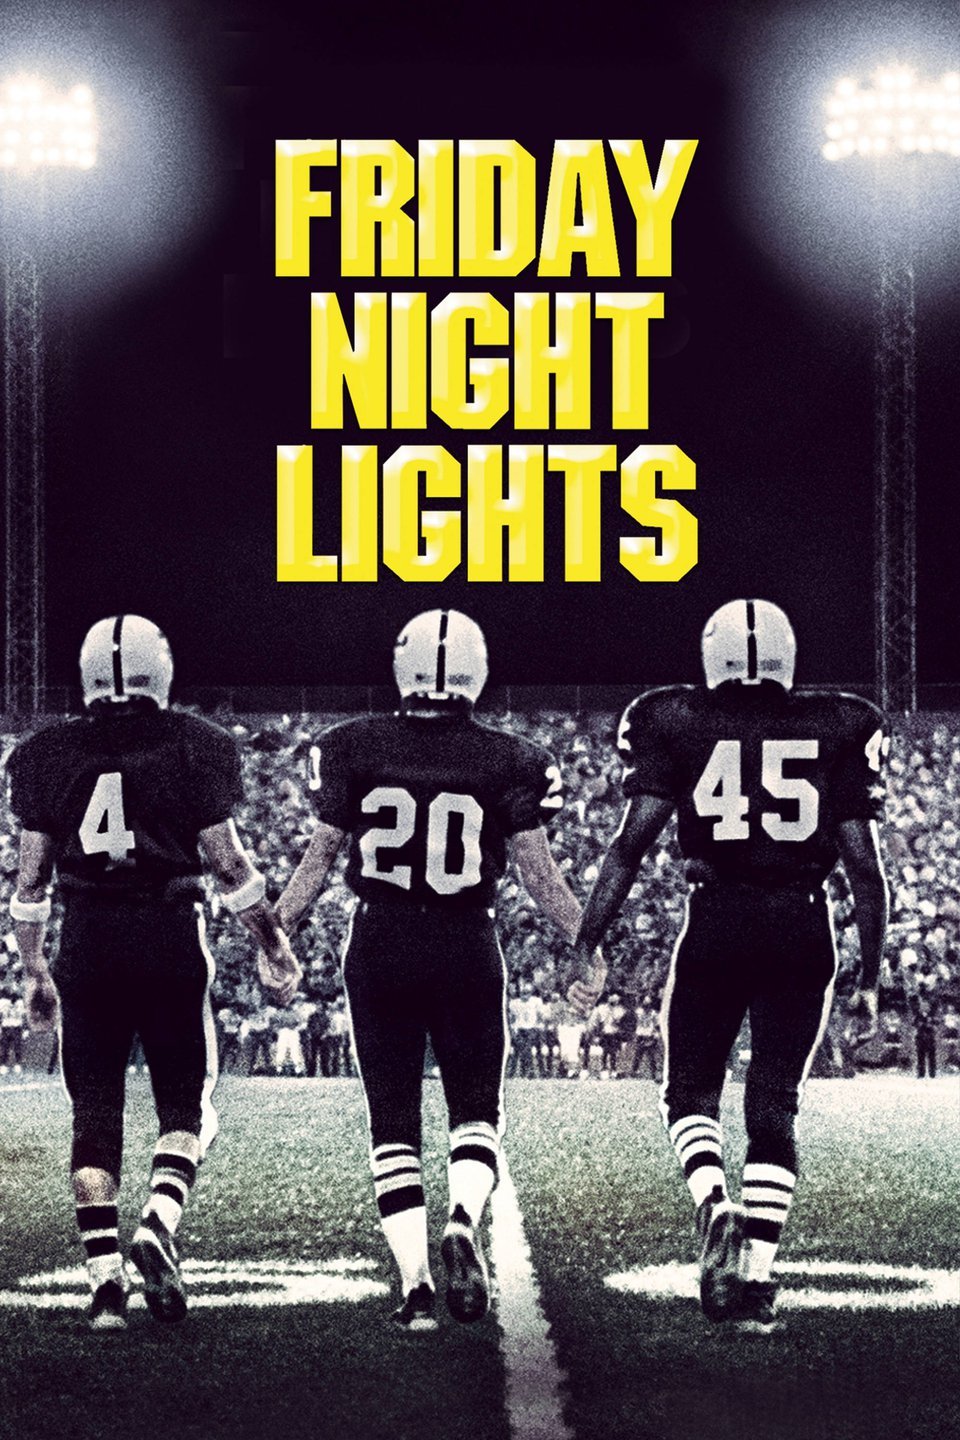 friday night lights movie cover